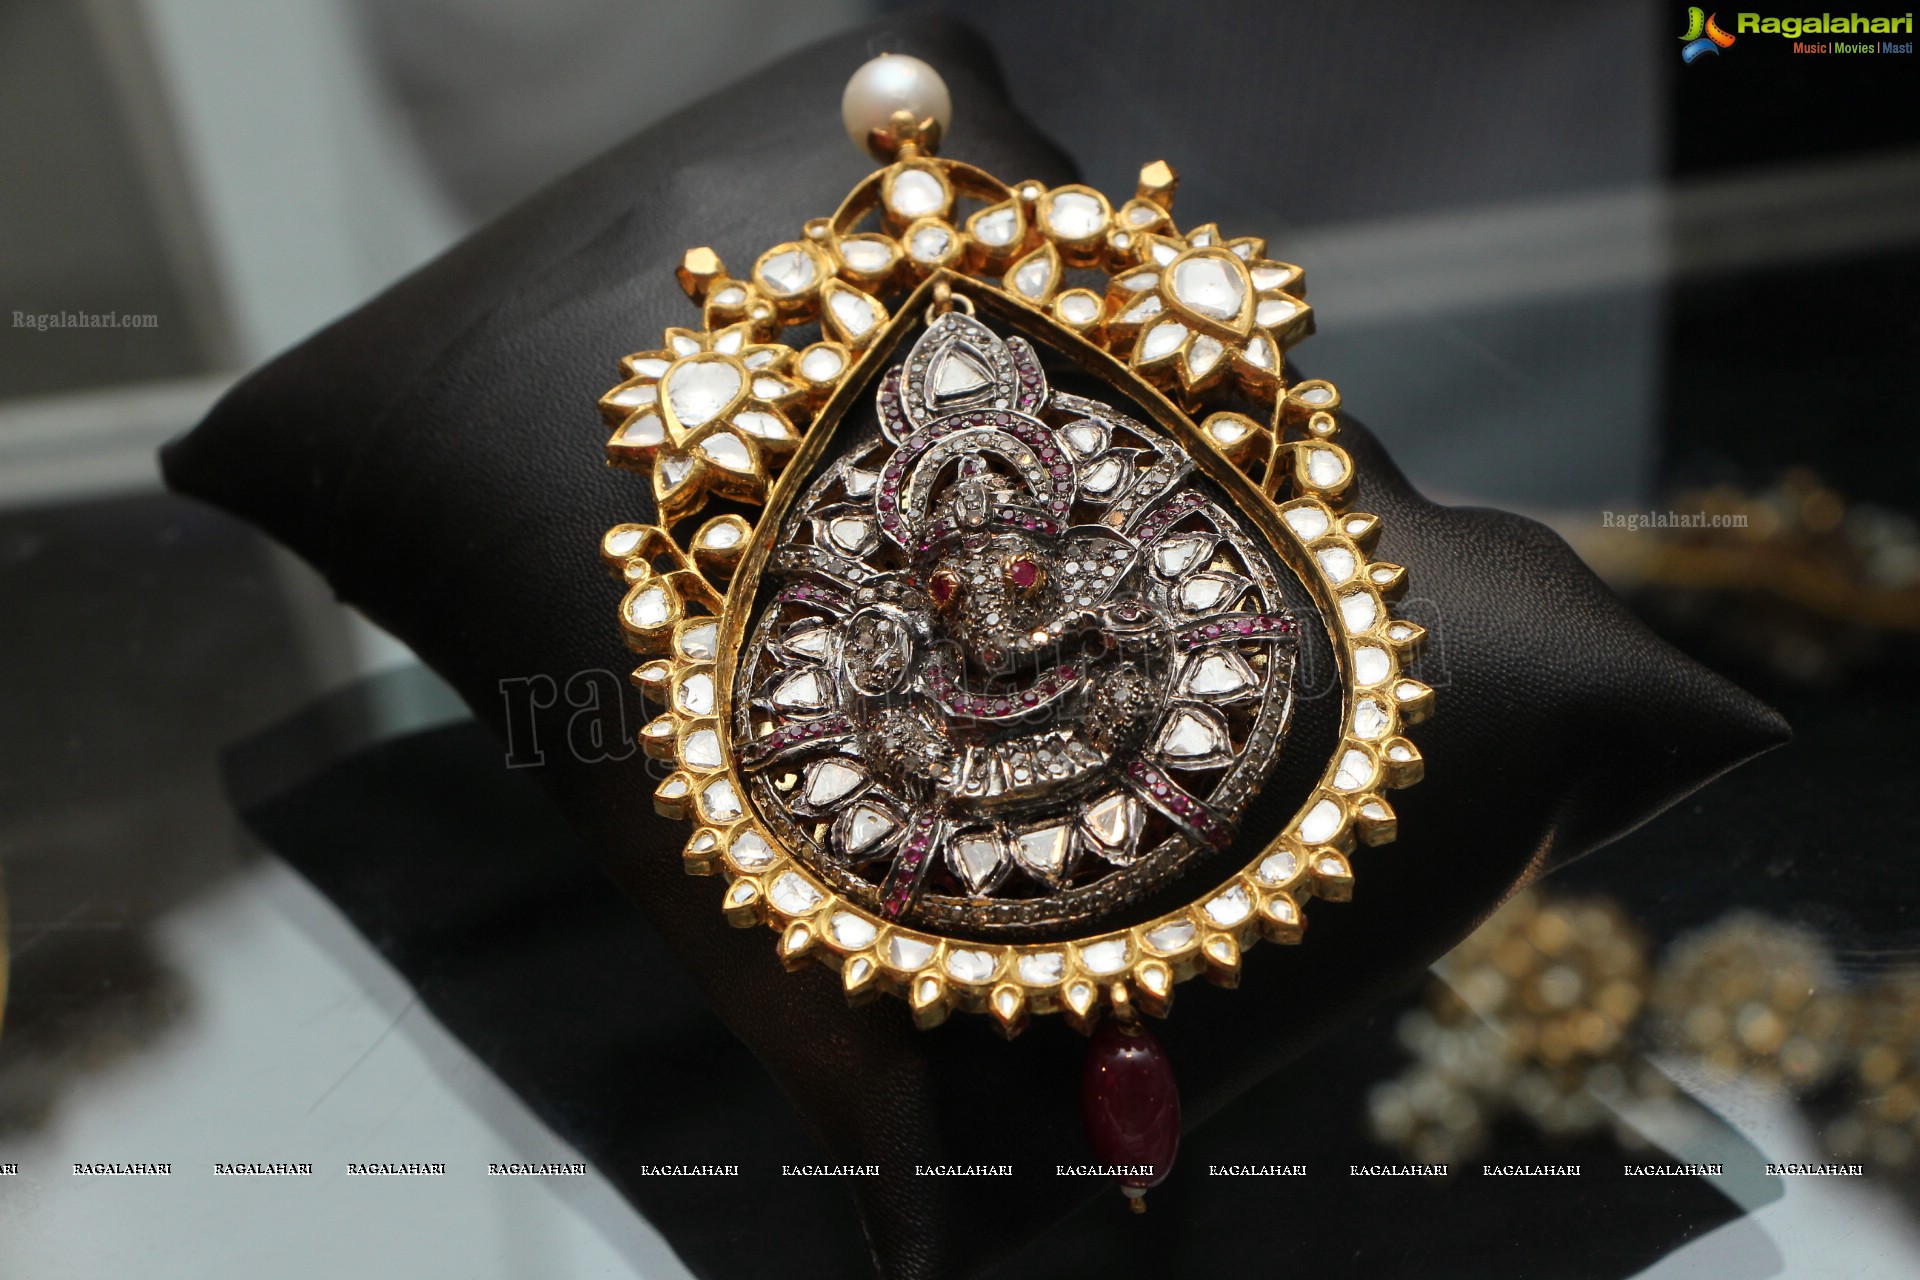 Aashiana Gold and Silver Select Exhibition at Taj Deccan, Hyderabad